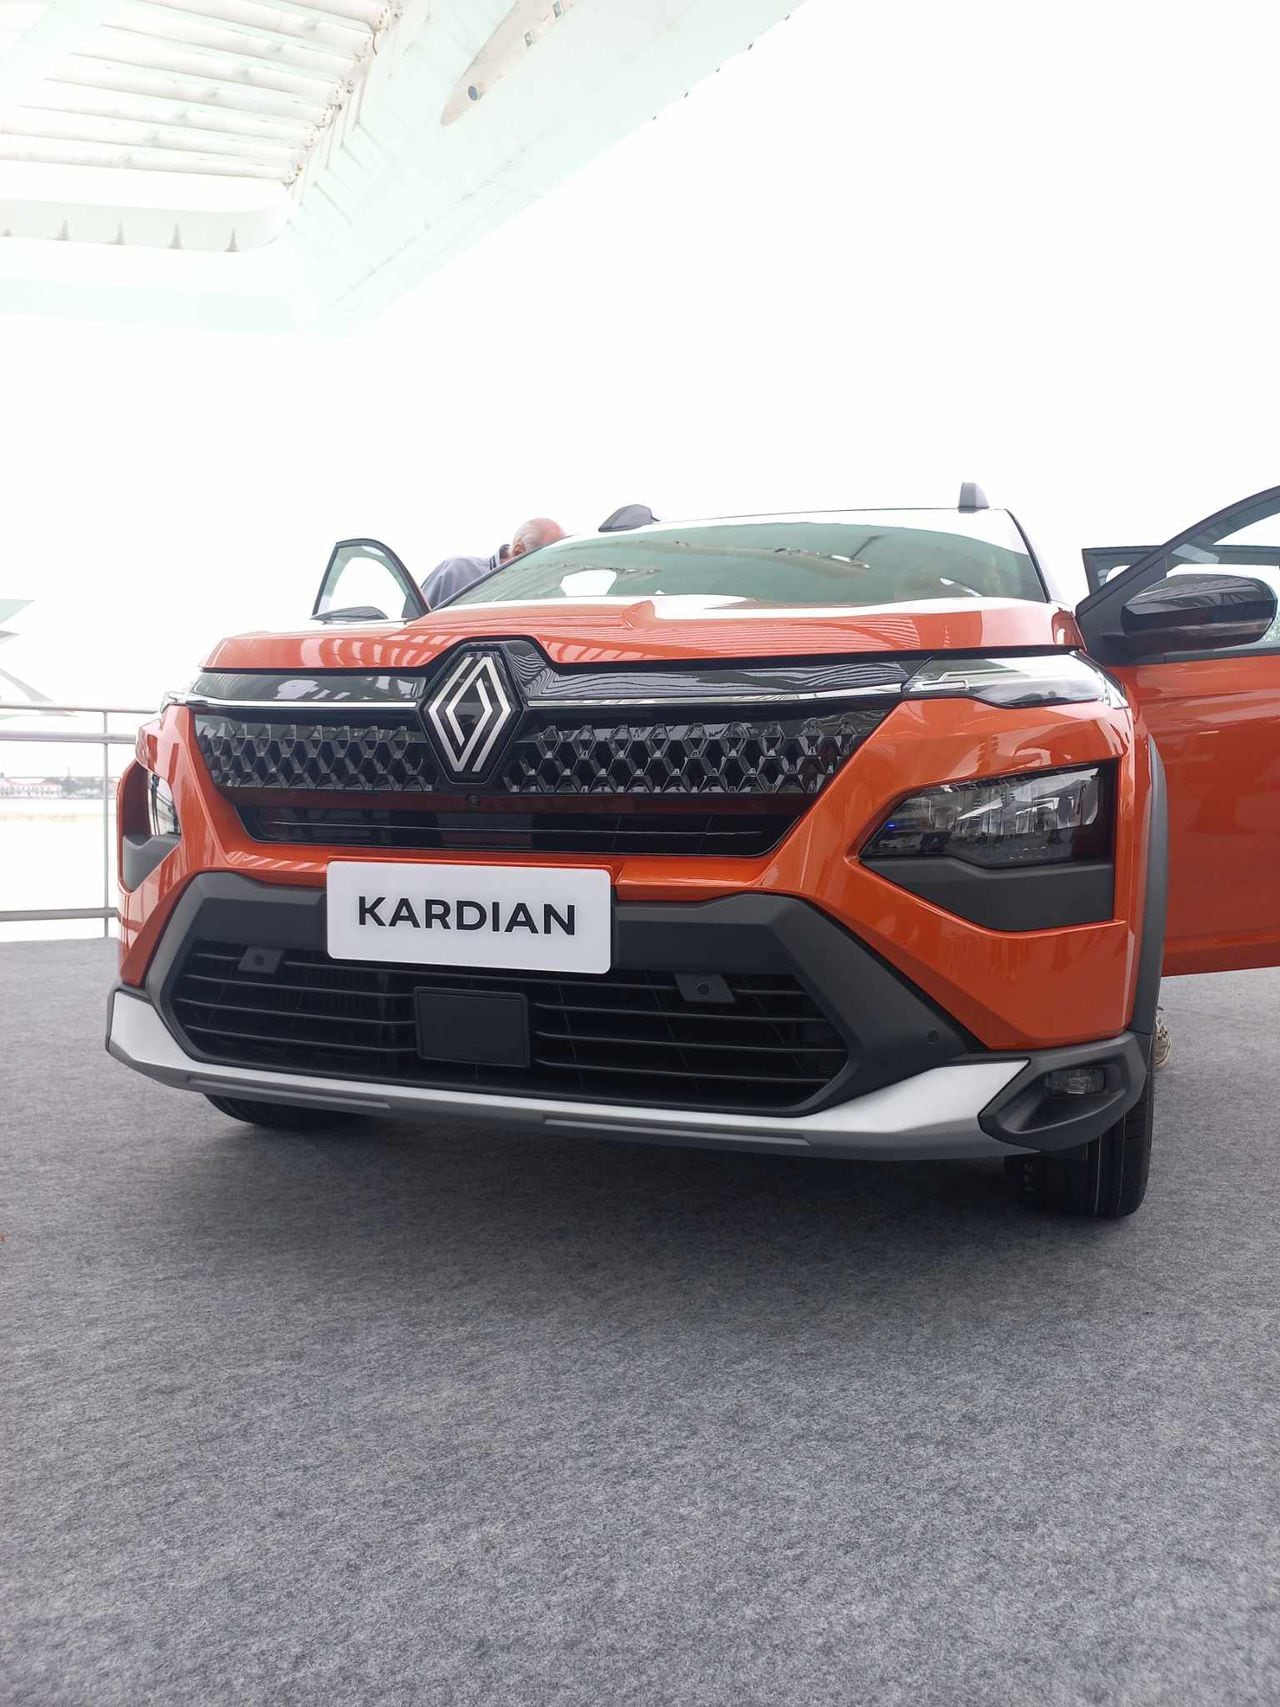 Nuevo Renault Kardian